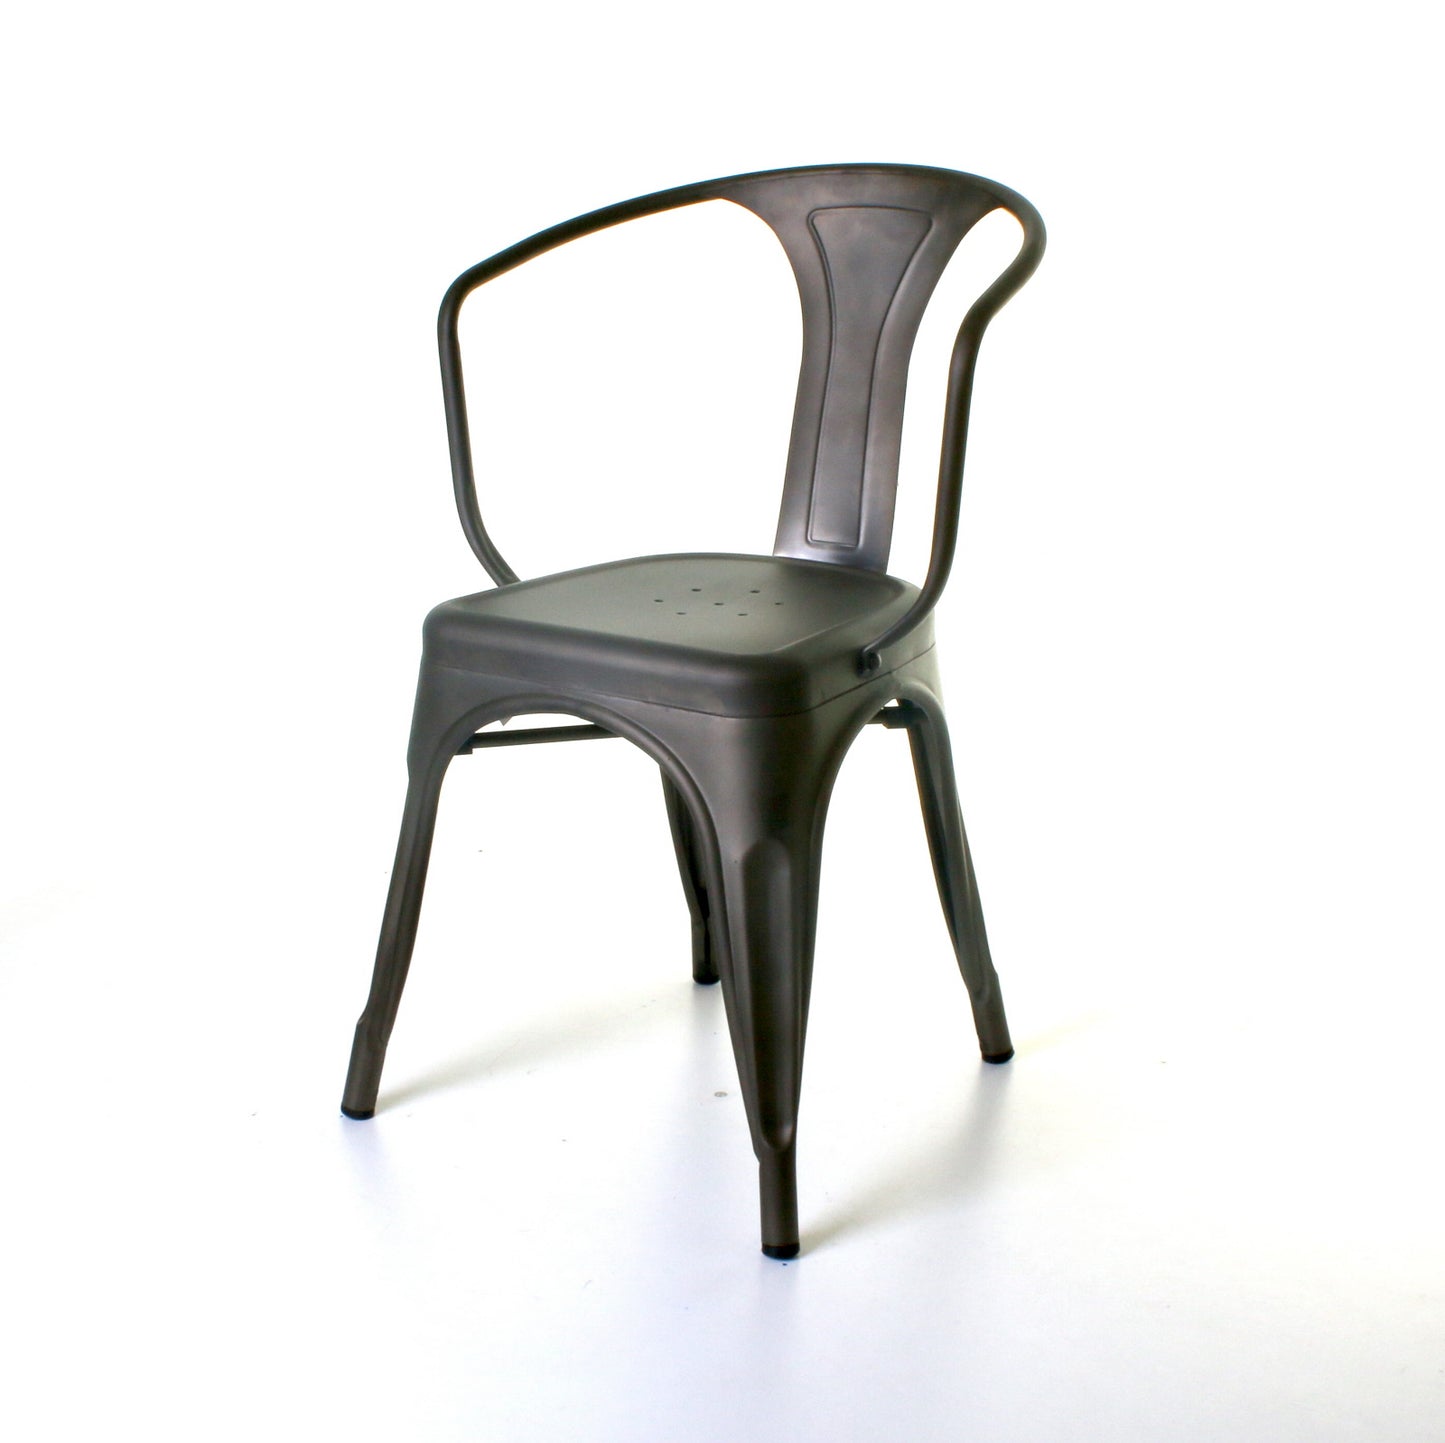 9PC Taranto Table, 2 Forli & 6 Siena Chairs Set - Gun Metal Grey